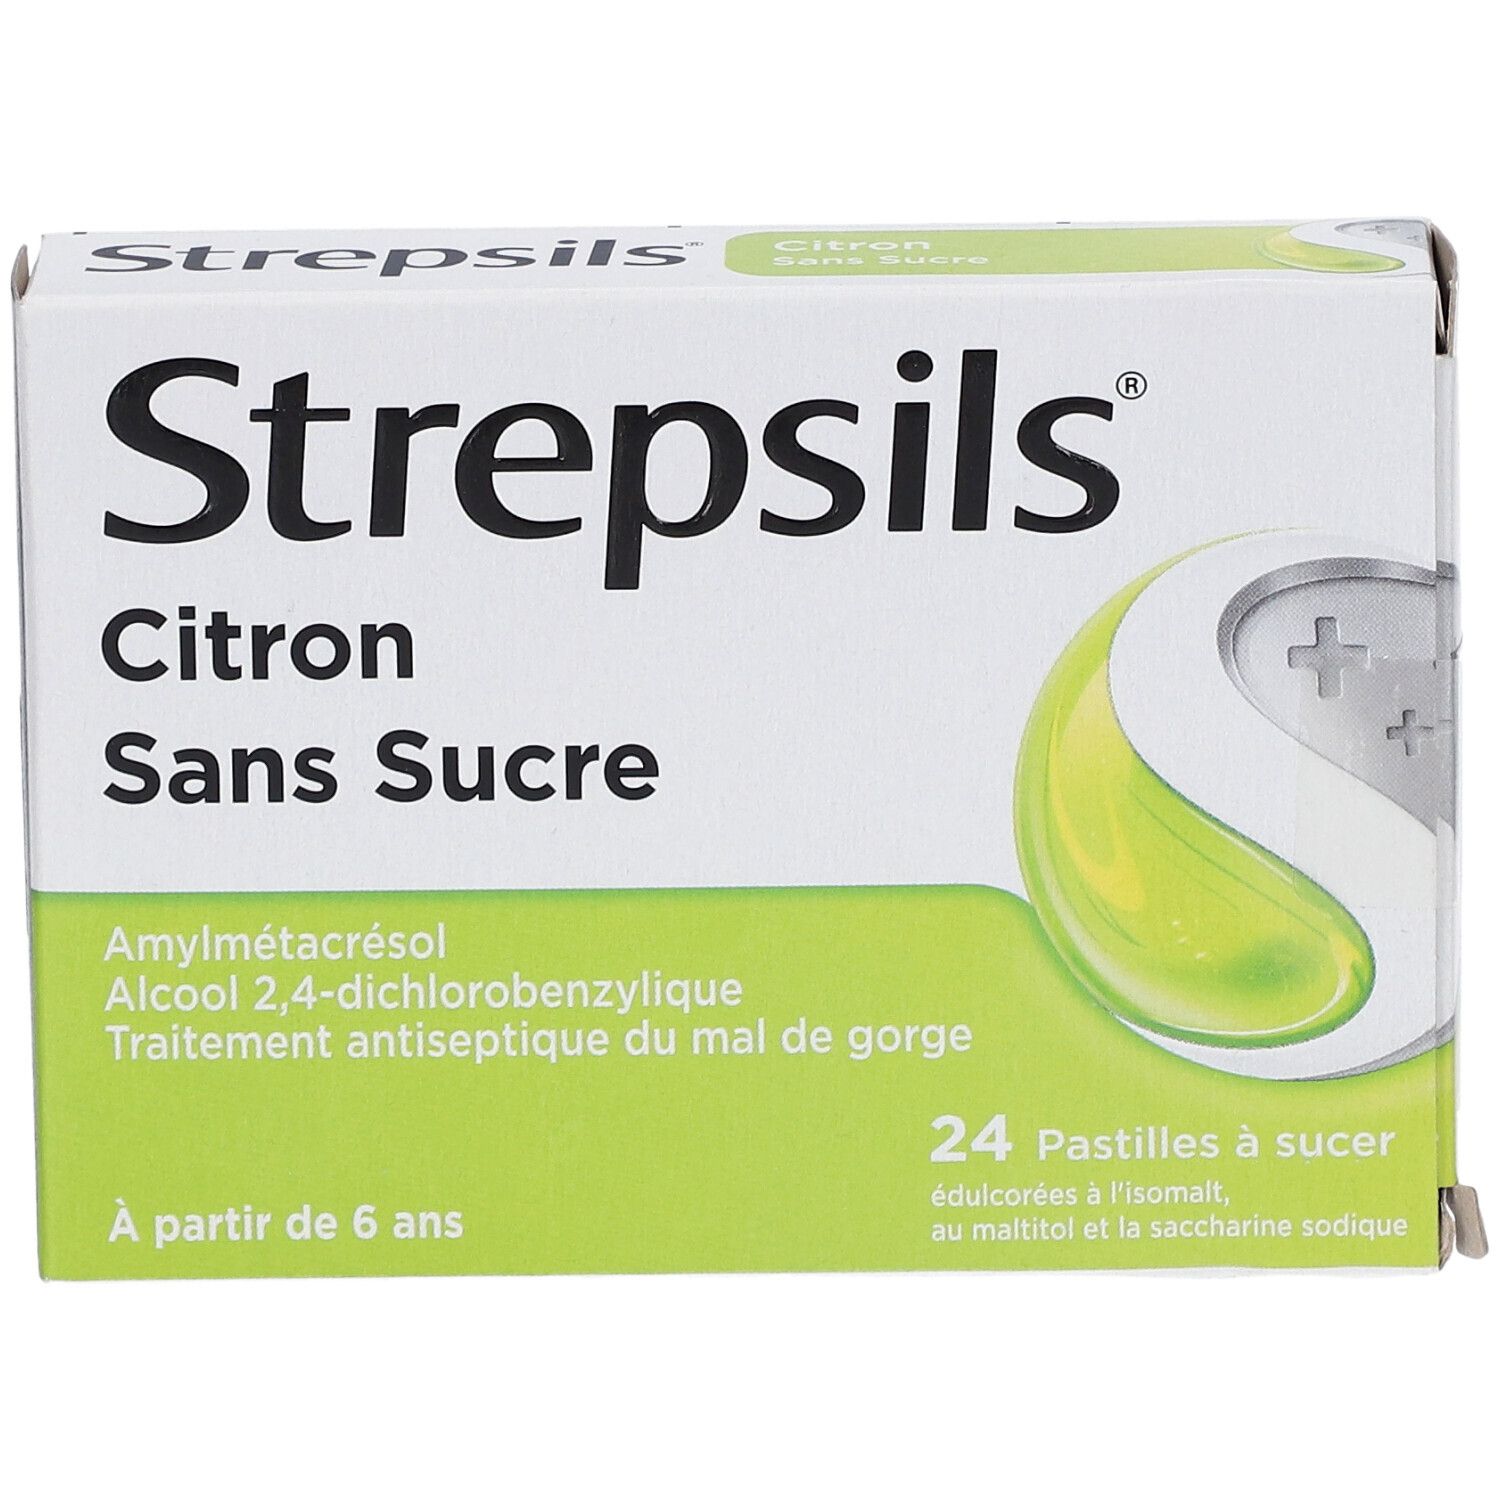 Strepsils® Citron s/s